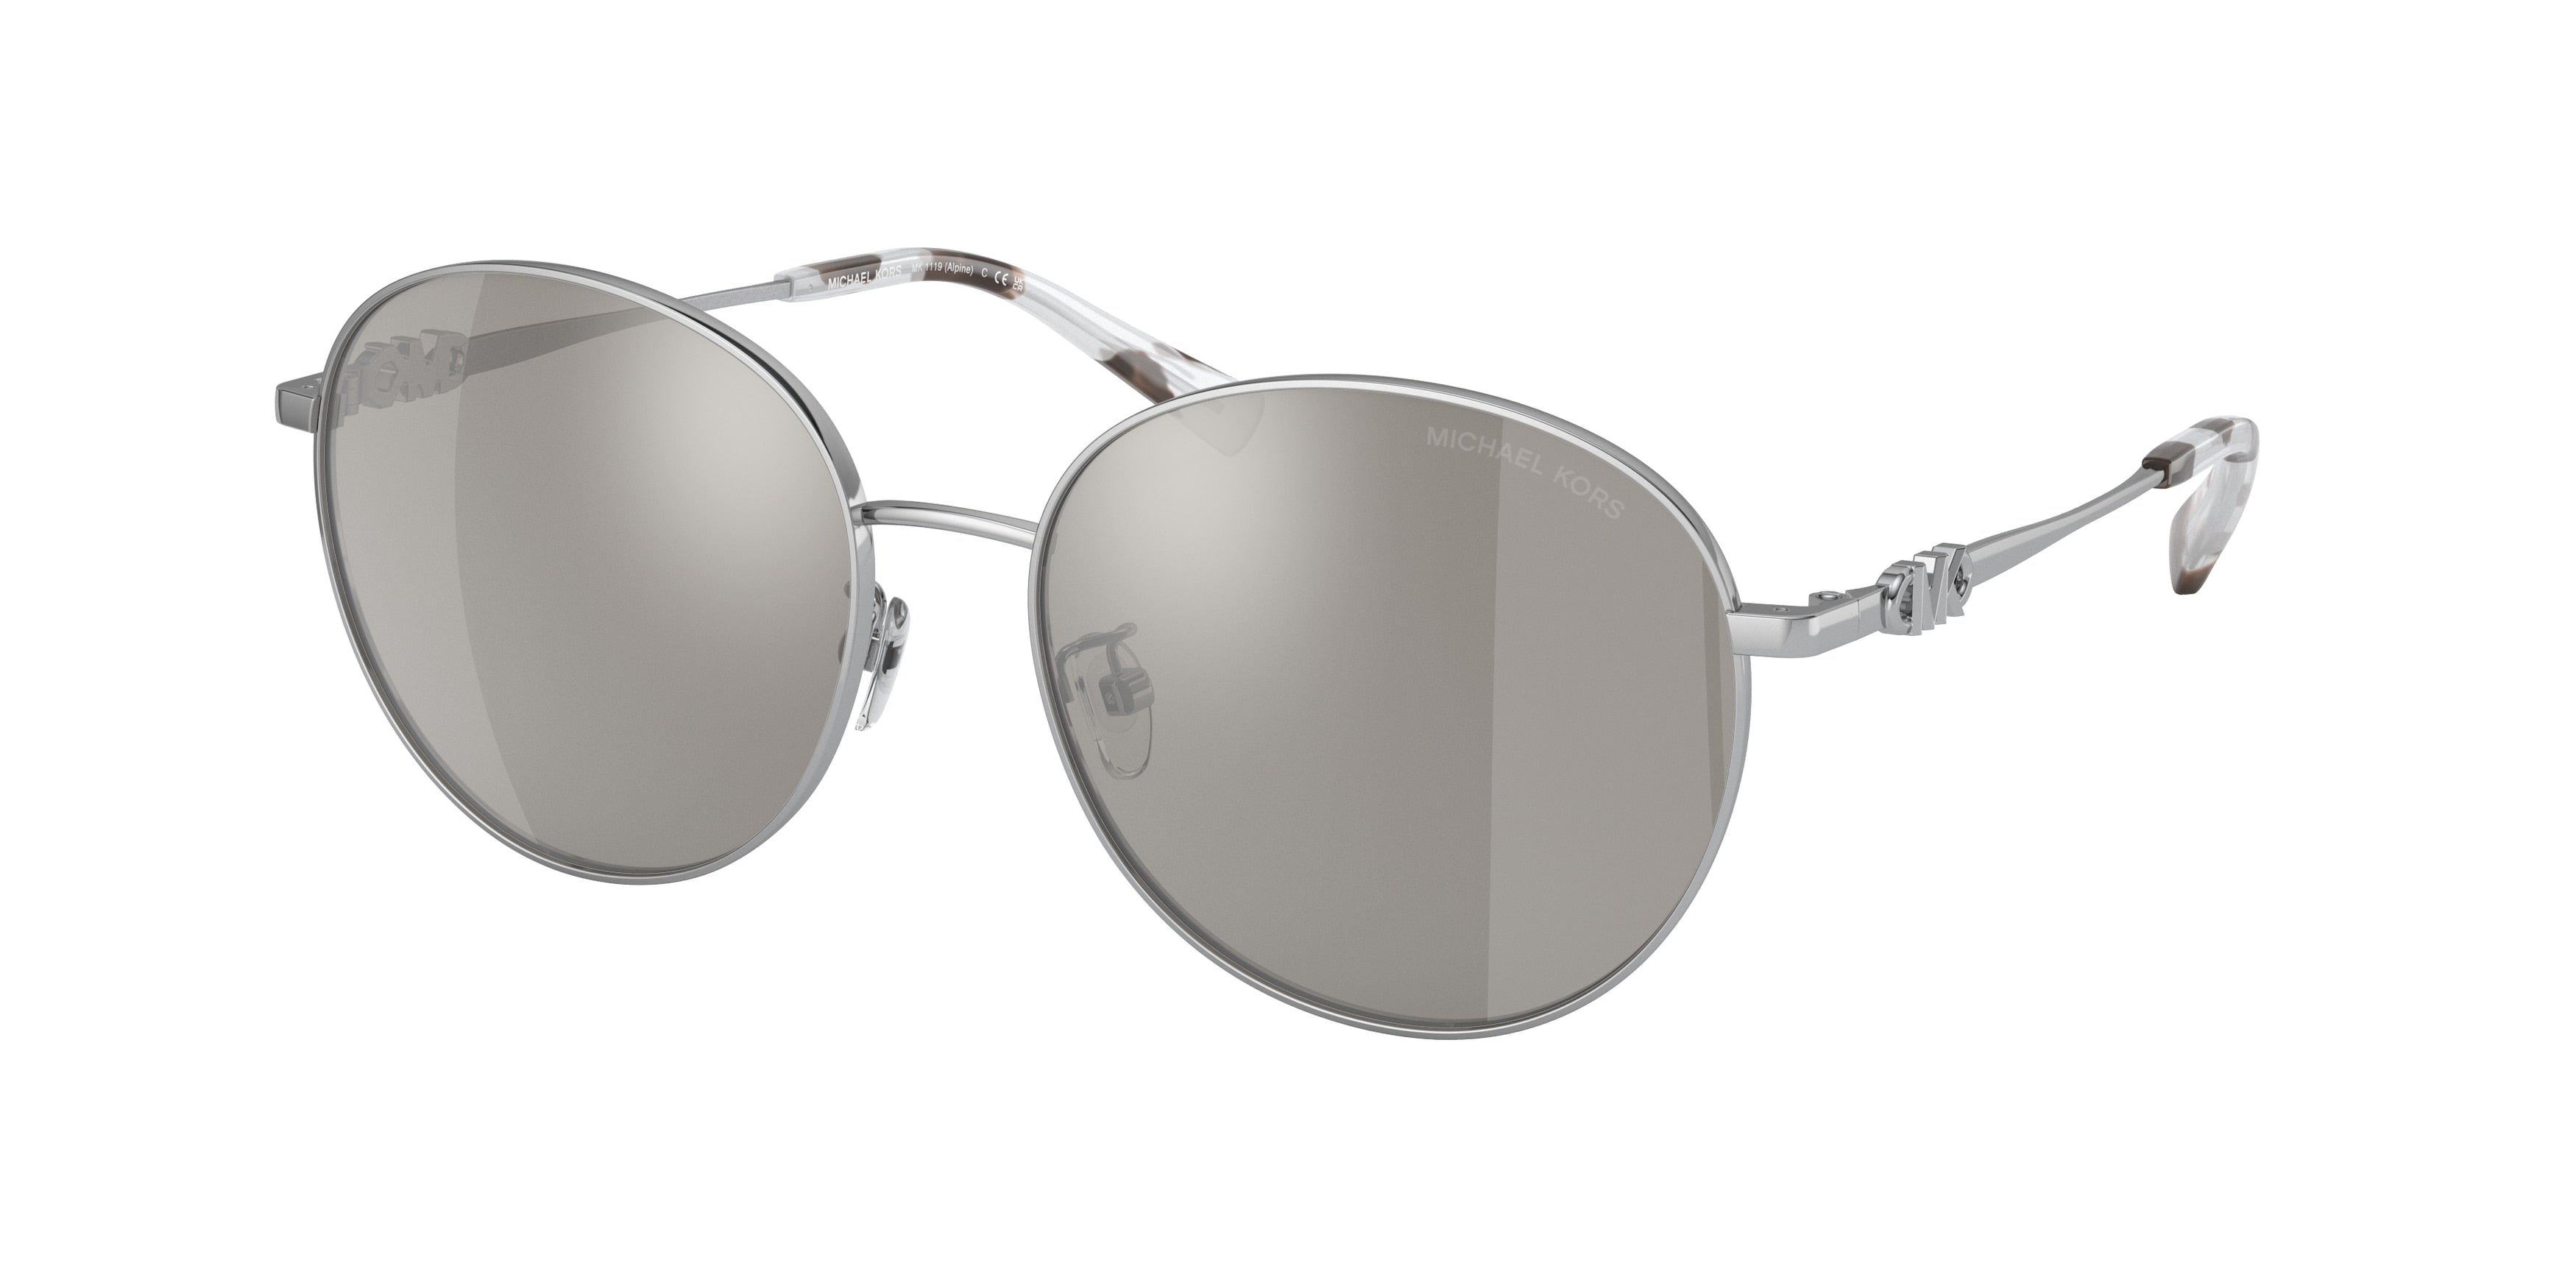 Michael Kors ALPINE MK1119 Round Sunglasses  11536G-Silver 57-140-16 - Color Map Silver